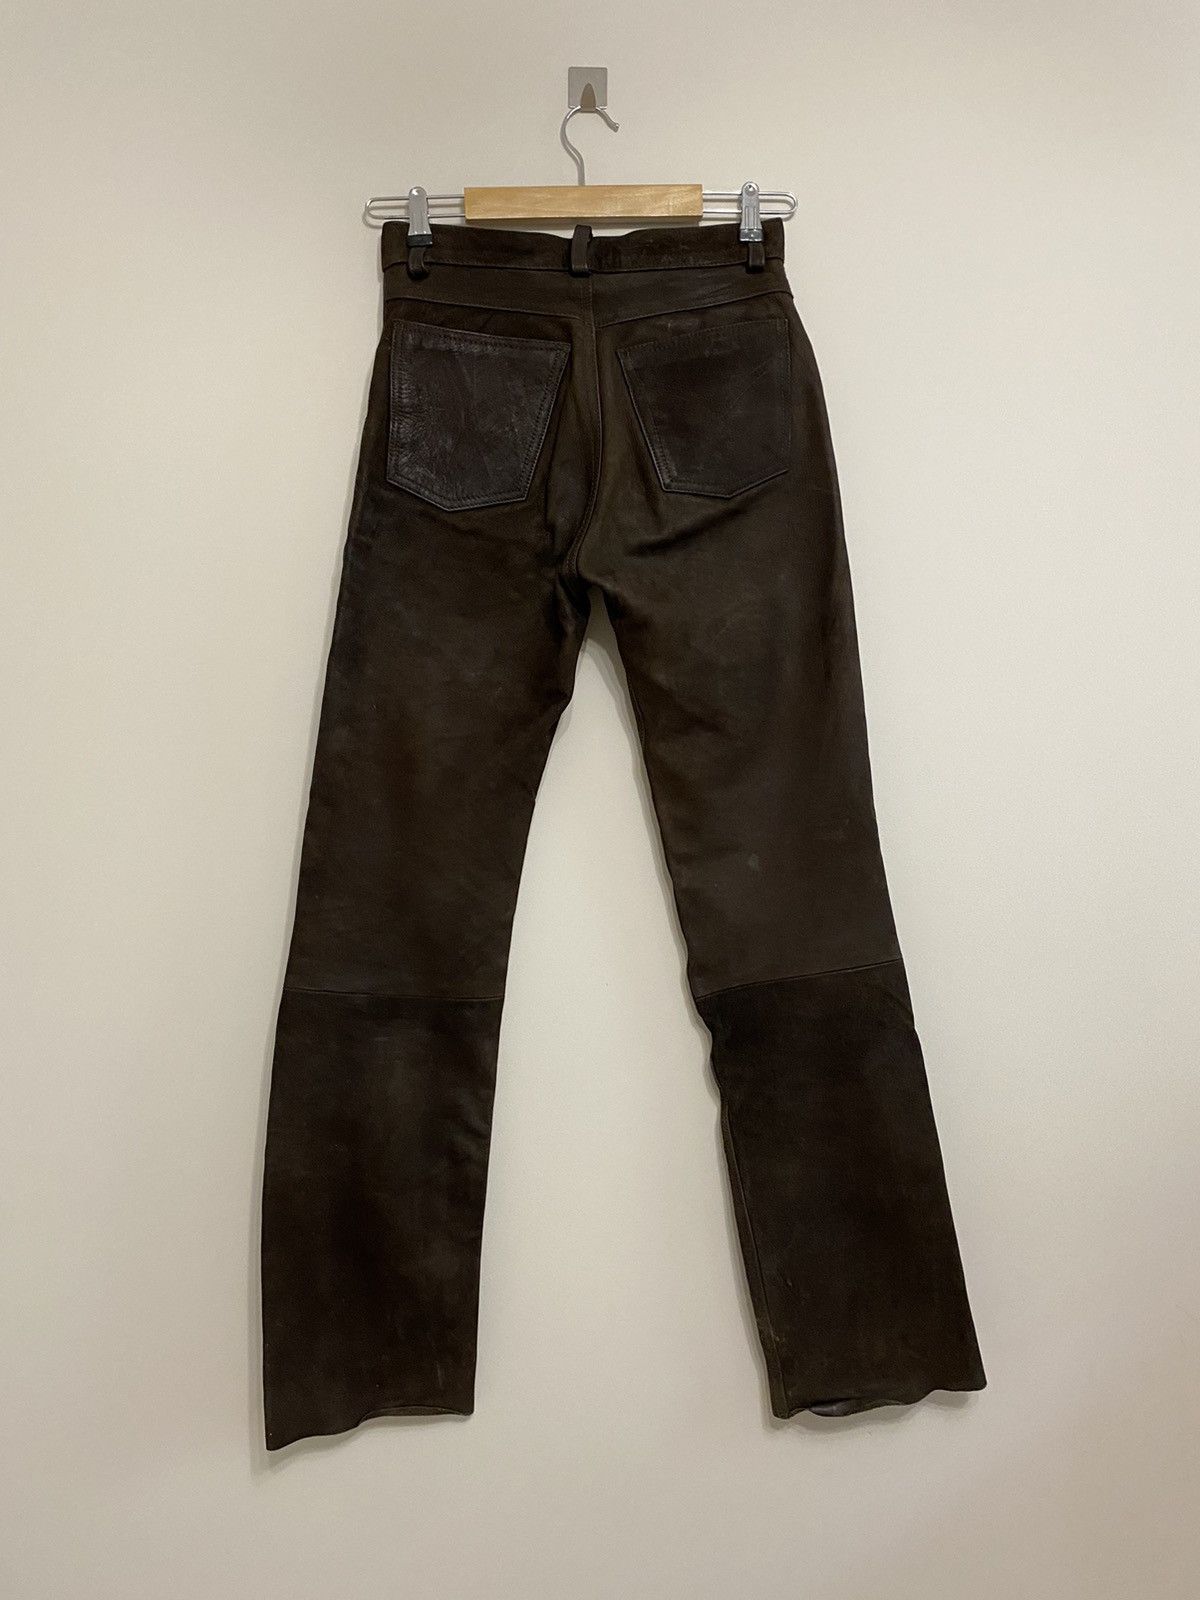 Vintage vintage japanese leather pants rick owens playboi carti | Grailed